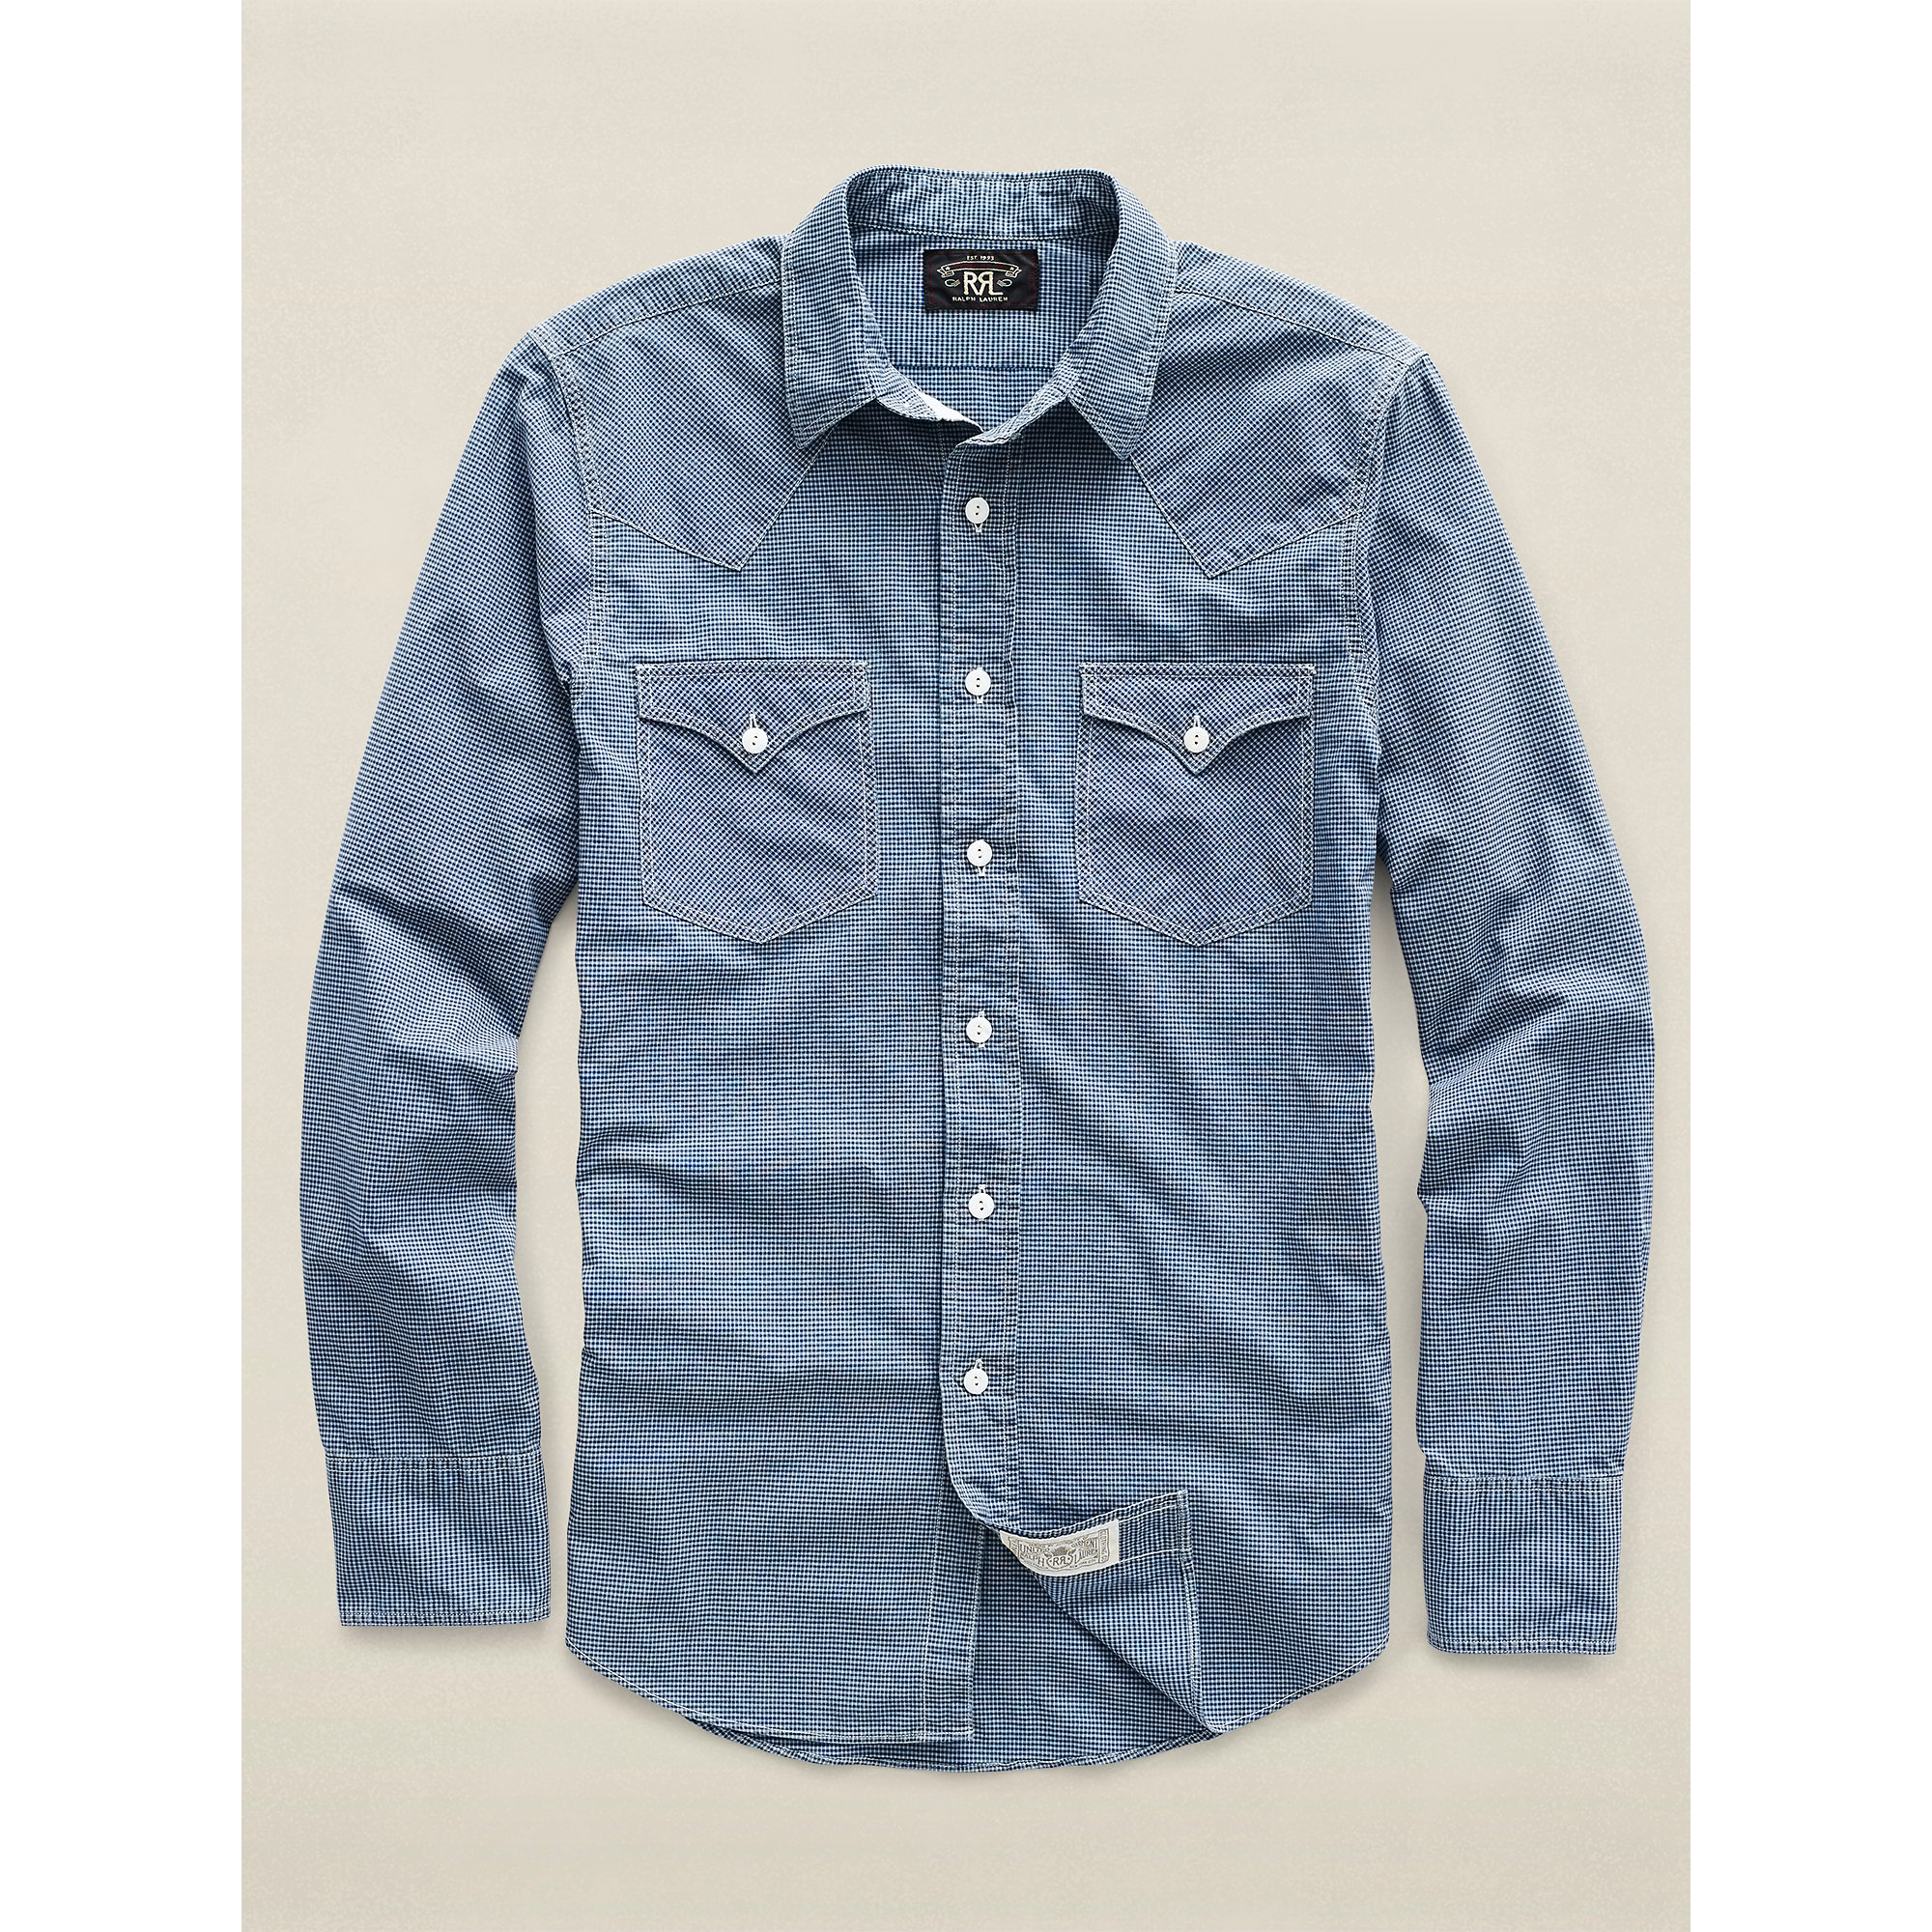 Lyst - Rrl Kane Cotton Western Shirt in Blue for Men